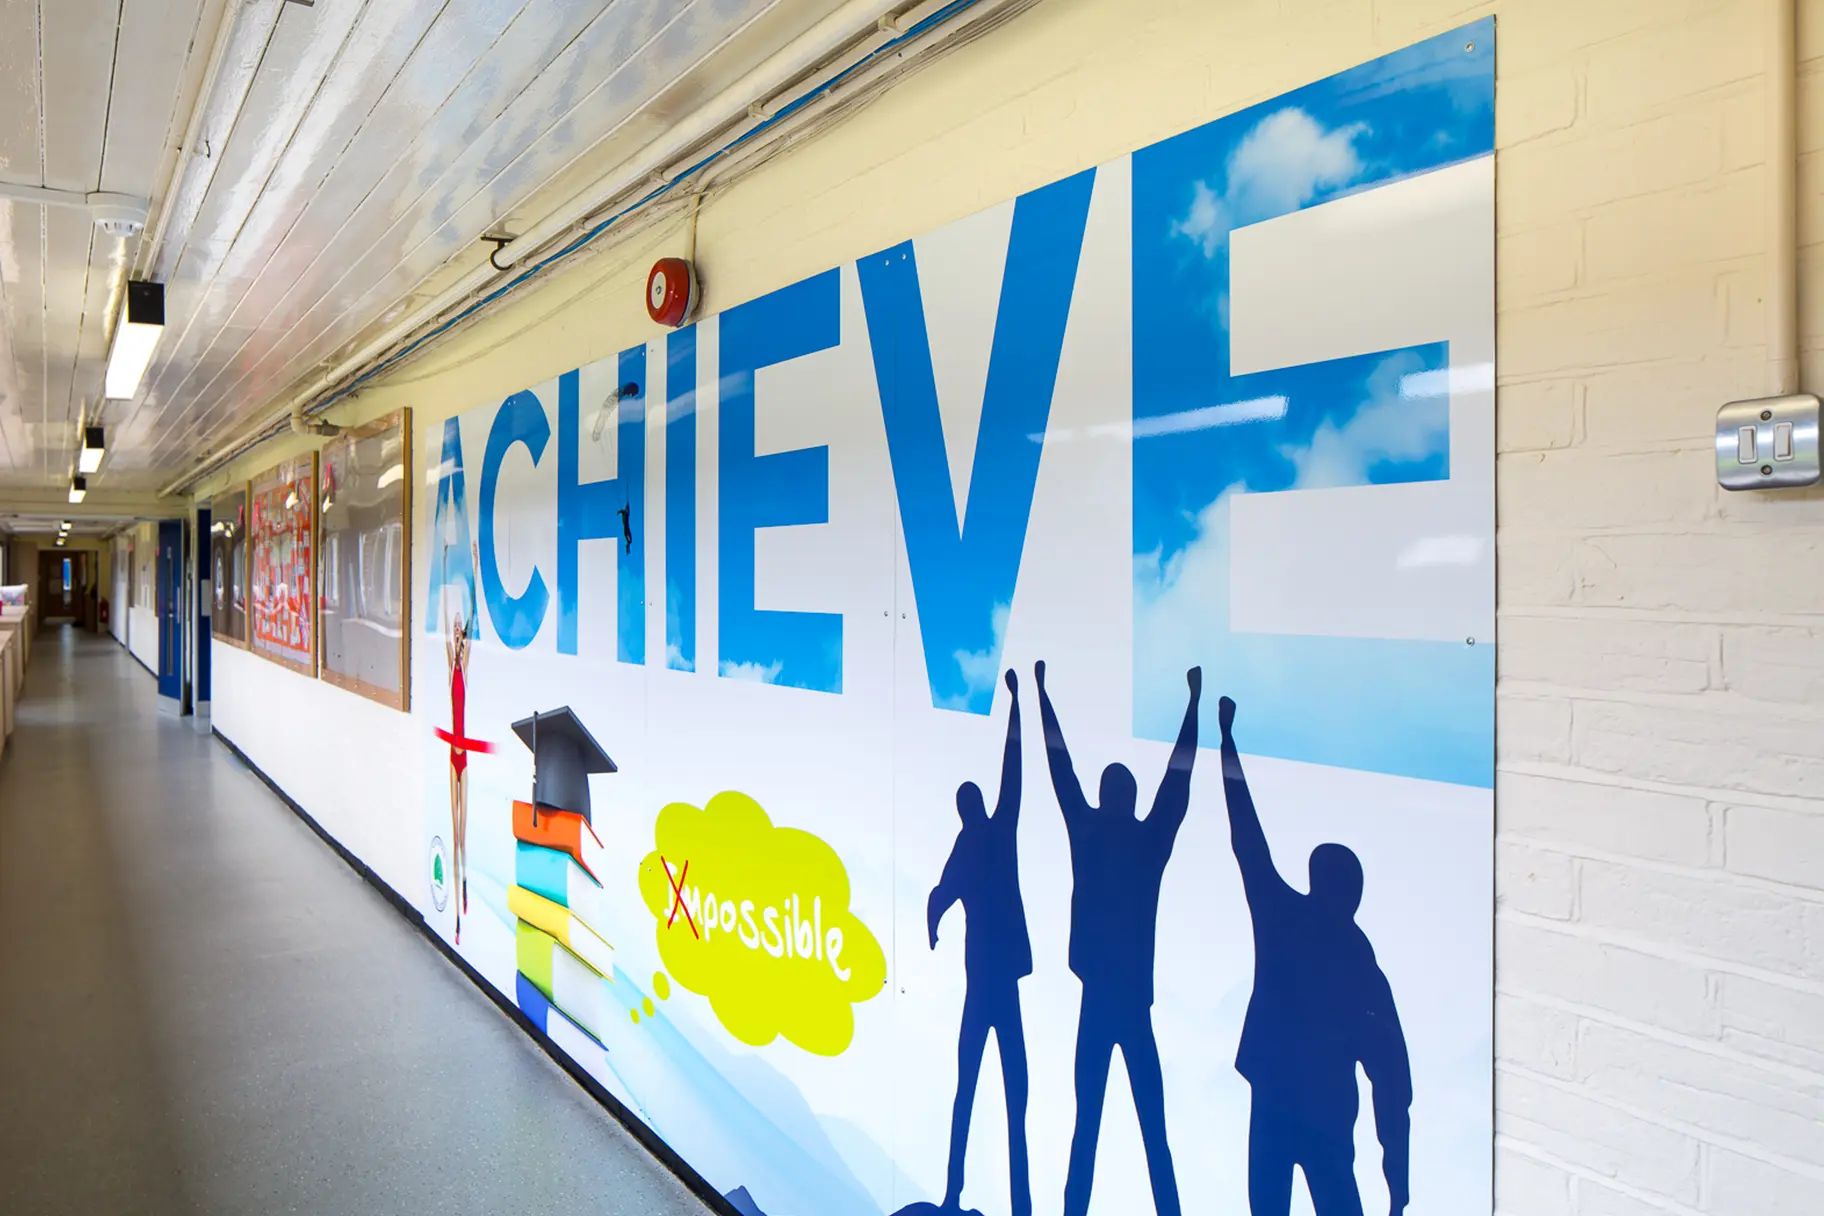 Southwood Primary motivating school key values corridor wall art